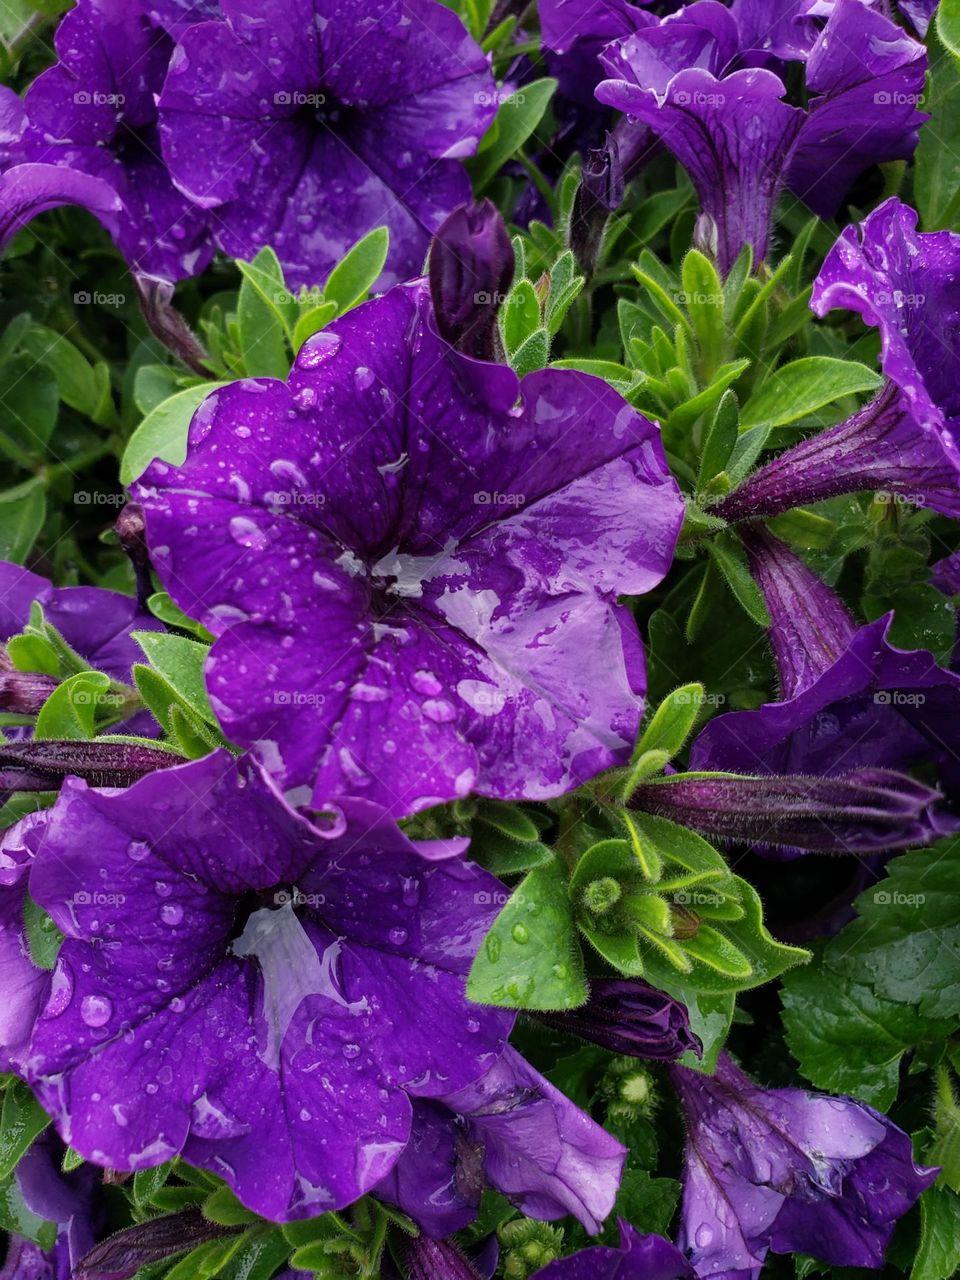 Beautiful purple flowers getting rained on